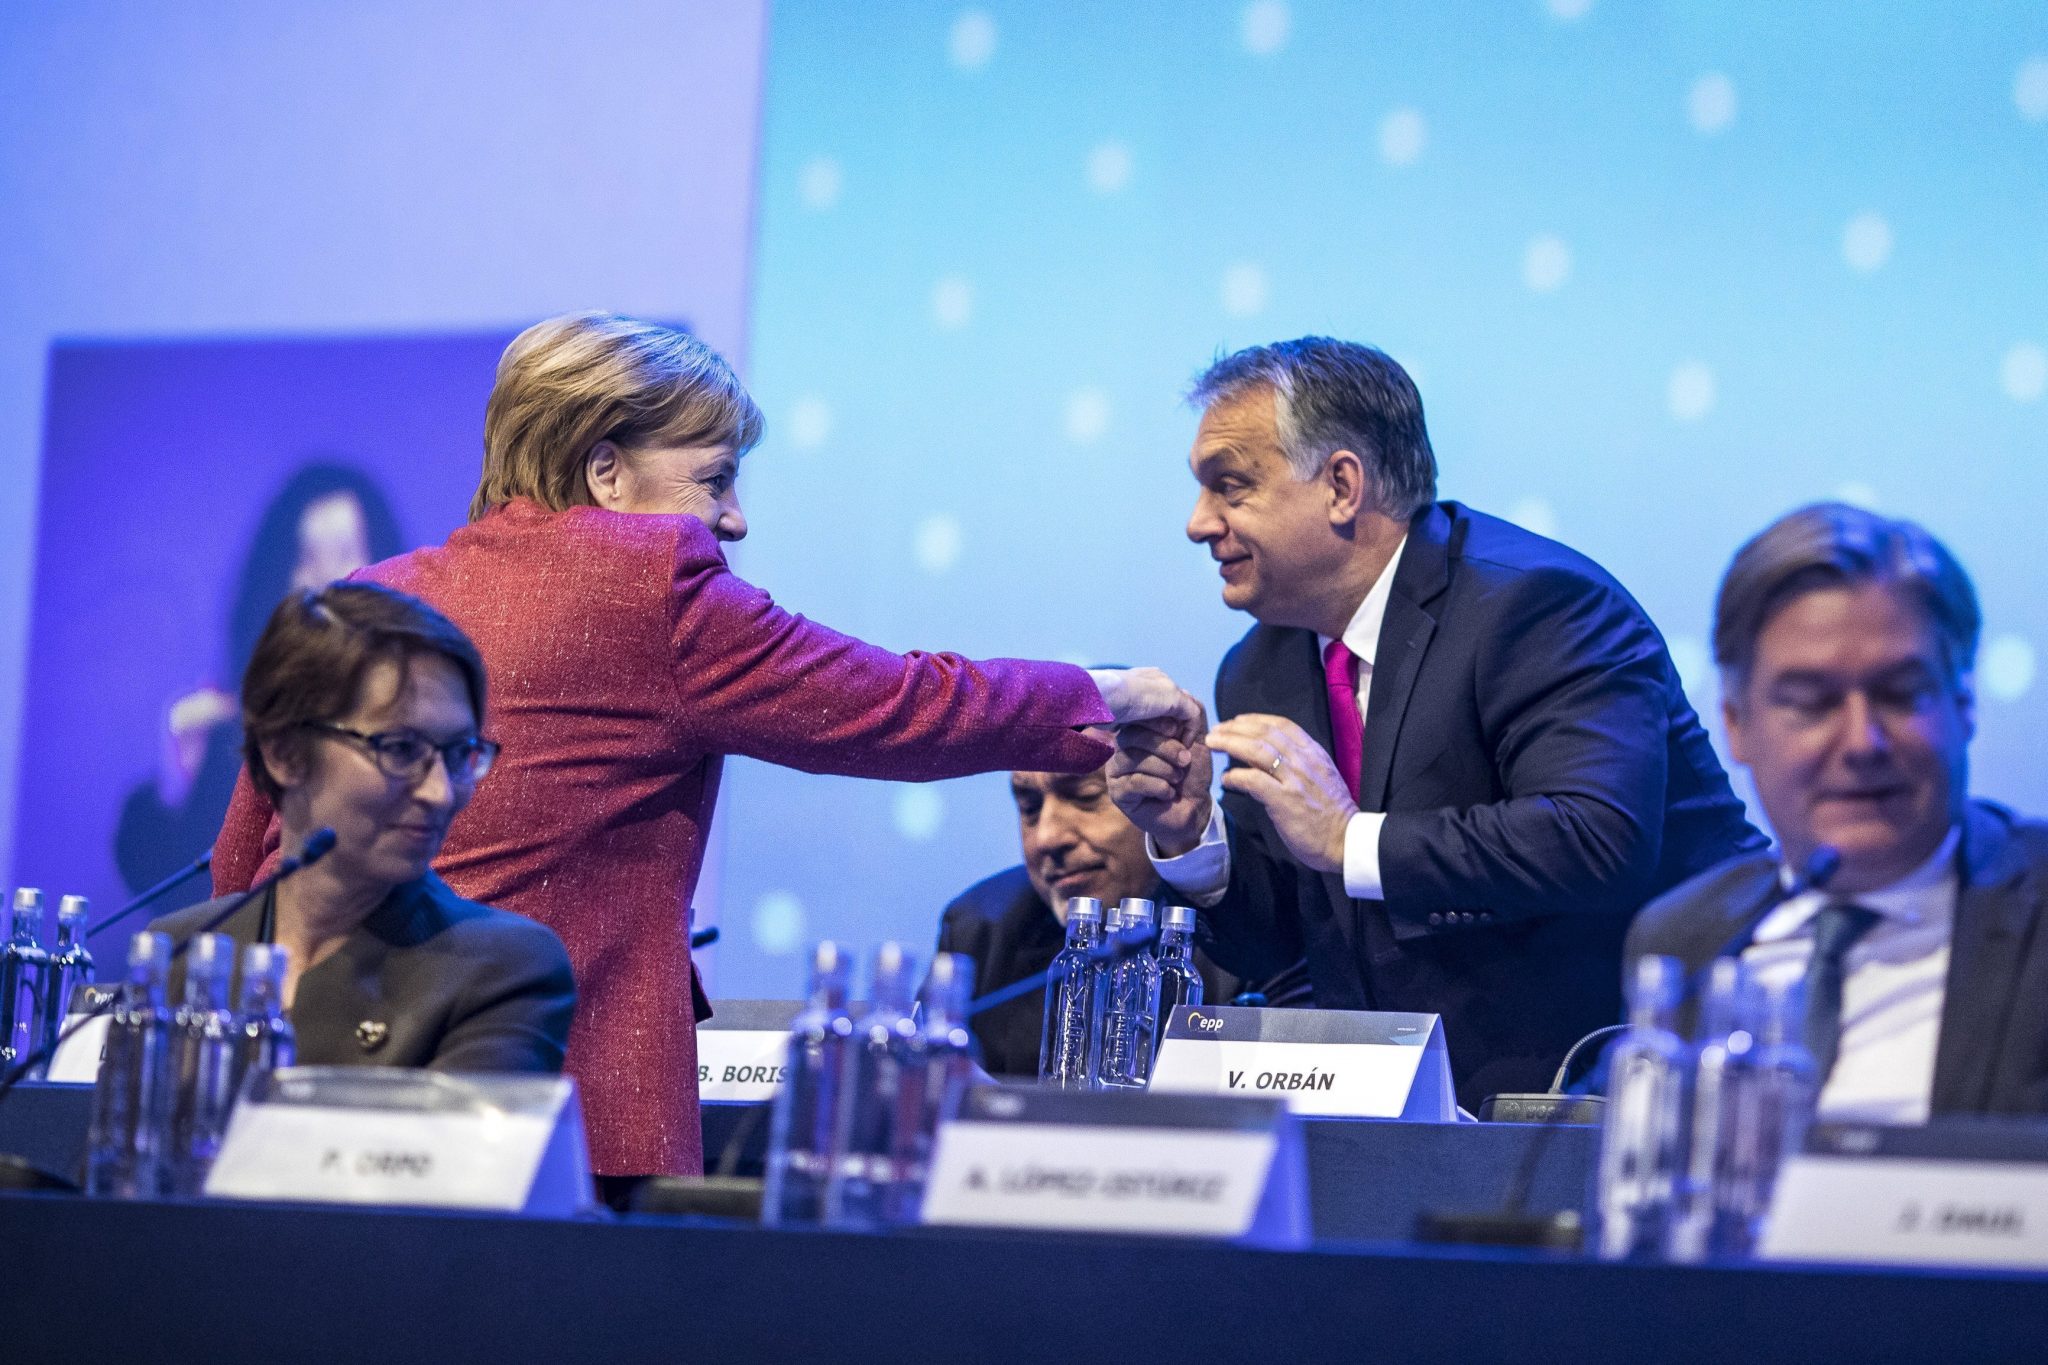 PM Orbán: 'We understood Merkel, she understood us', but era of ambiguity over